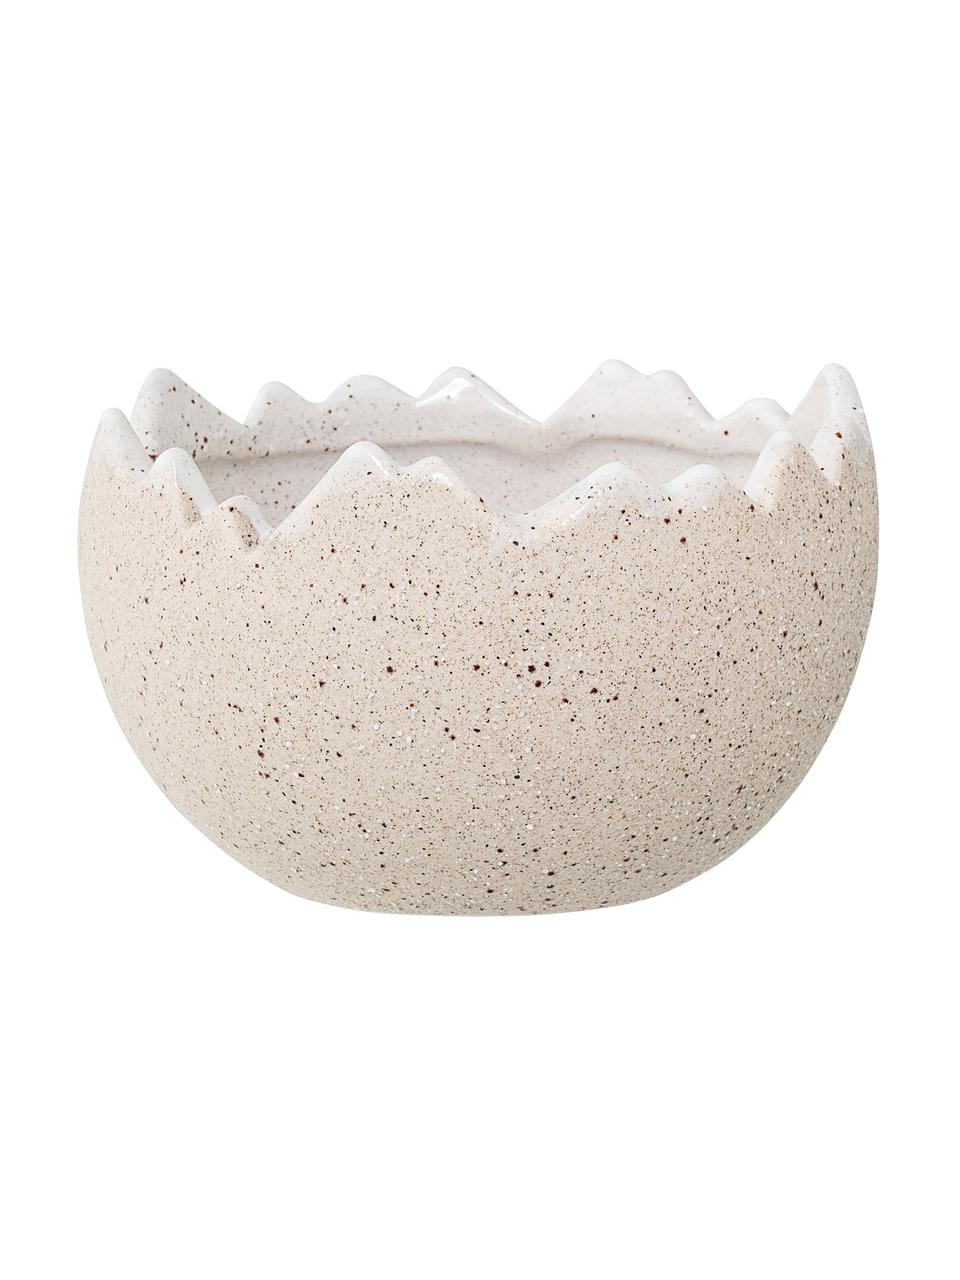 Porta vaso Eggshell, Gres, Crema, marrone, Ø 13 x Alt. 8 cm